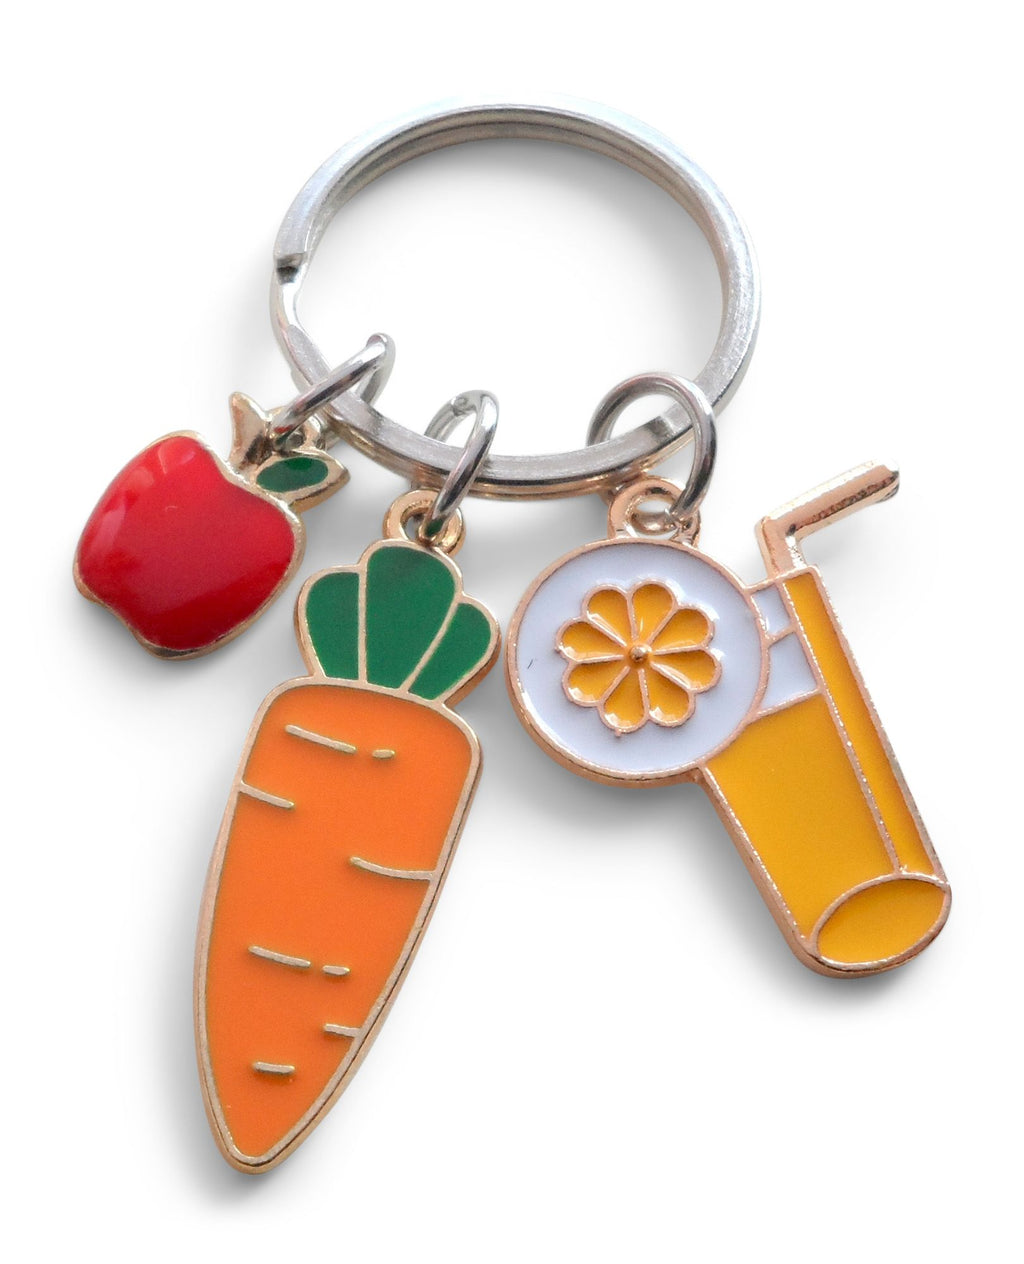 Food Service Charm Keychain with Carrot Charm, Apple Charm, and Orange Juice Charm, Food Service Employee Appreciation Keychain